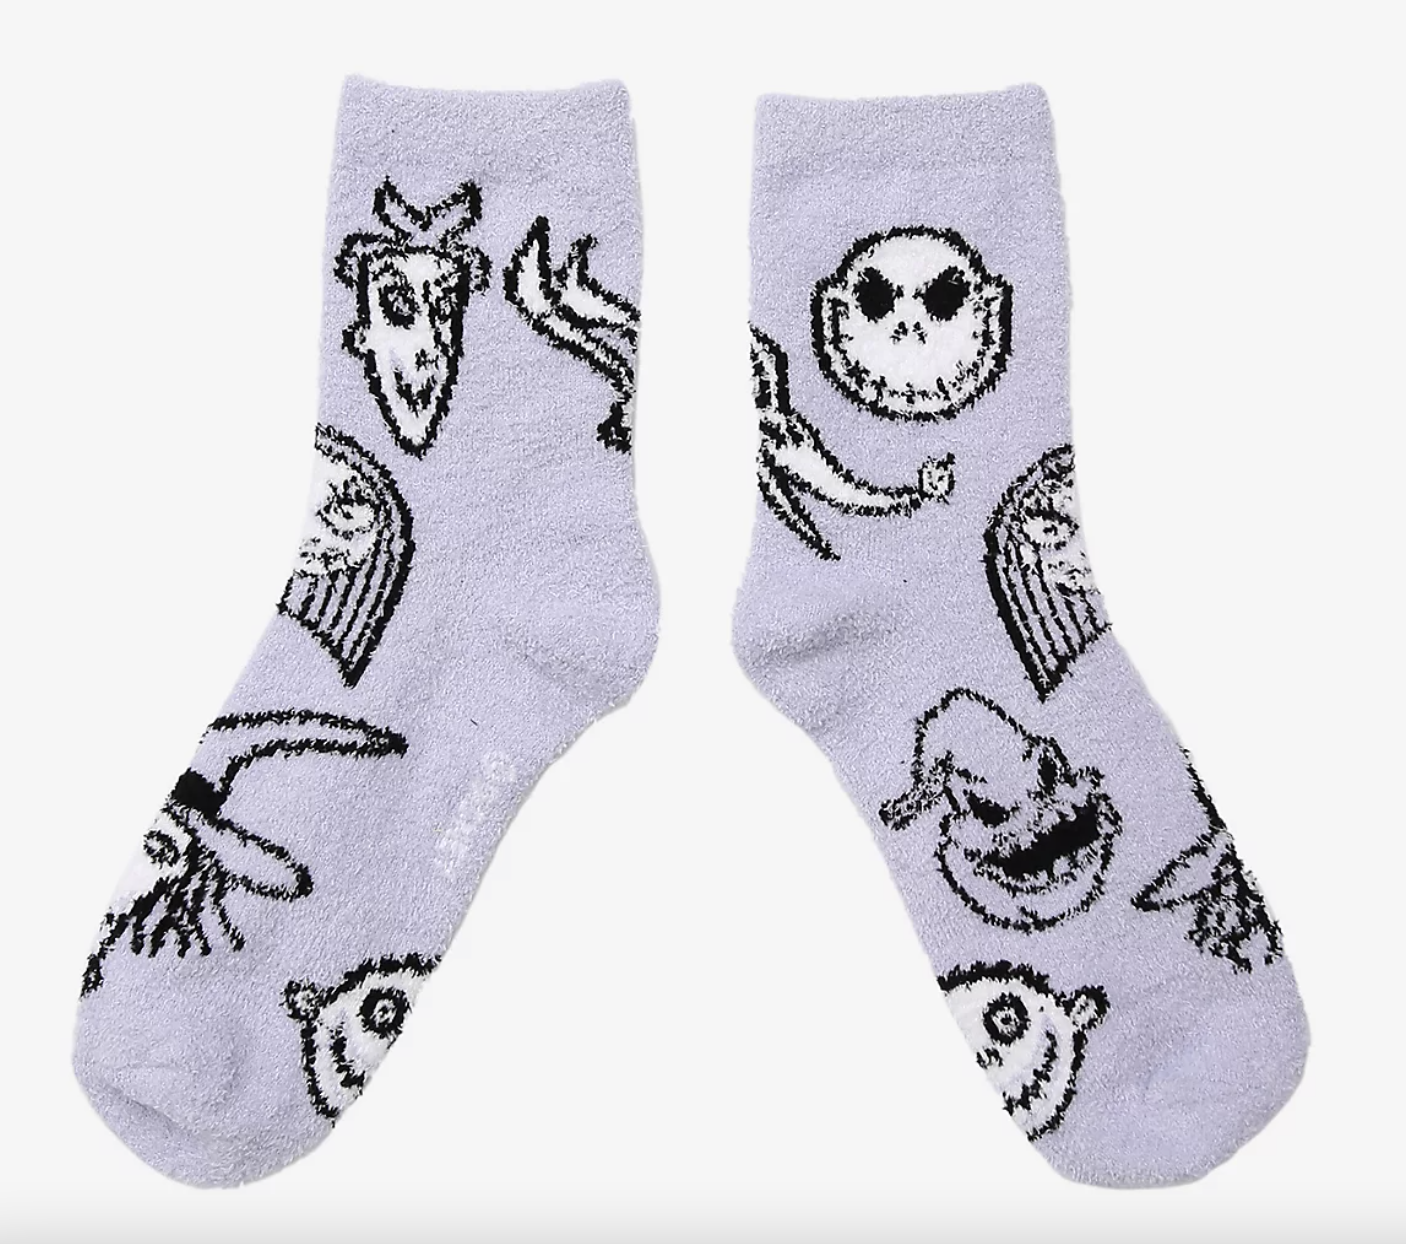 the socks